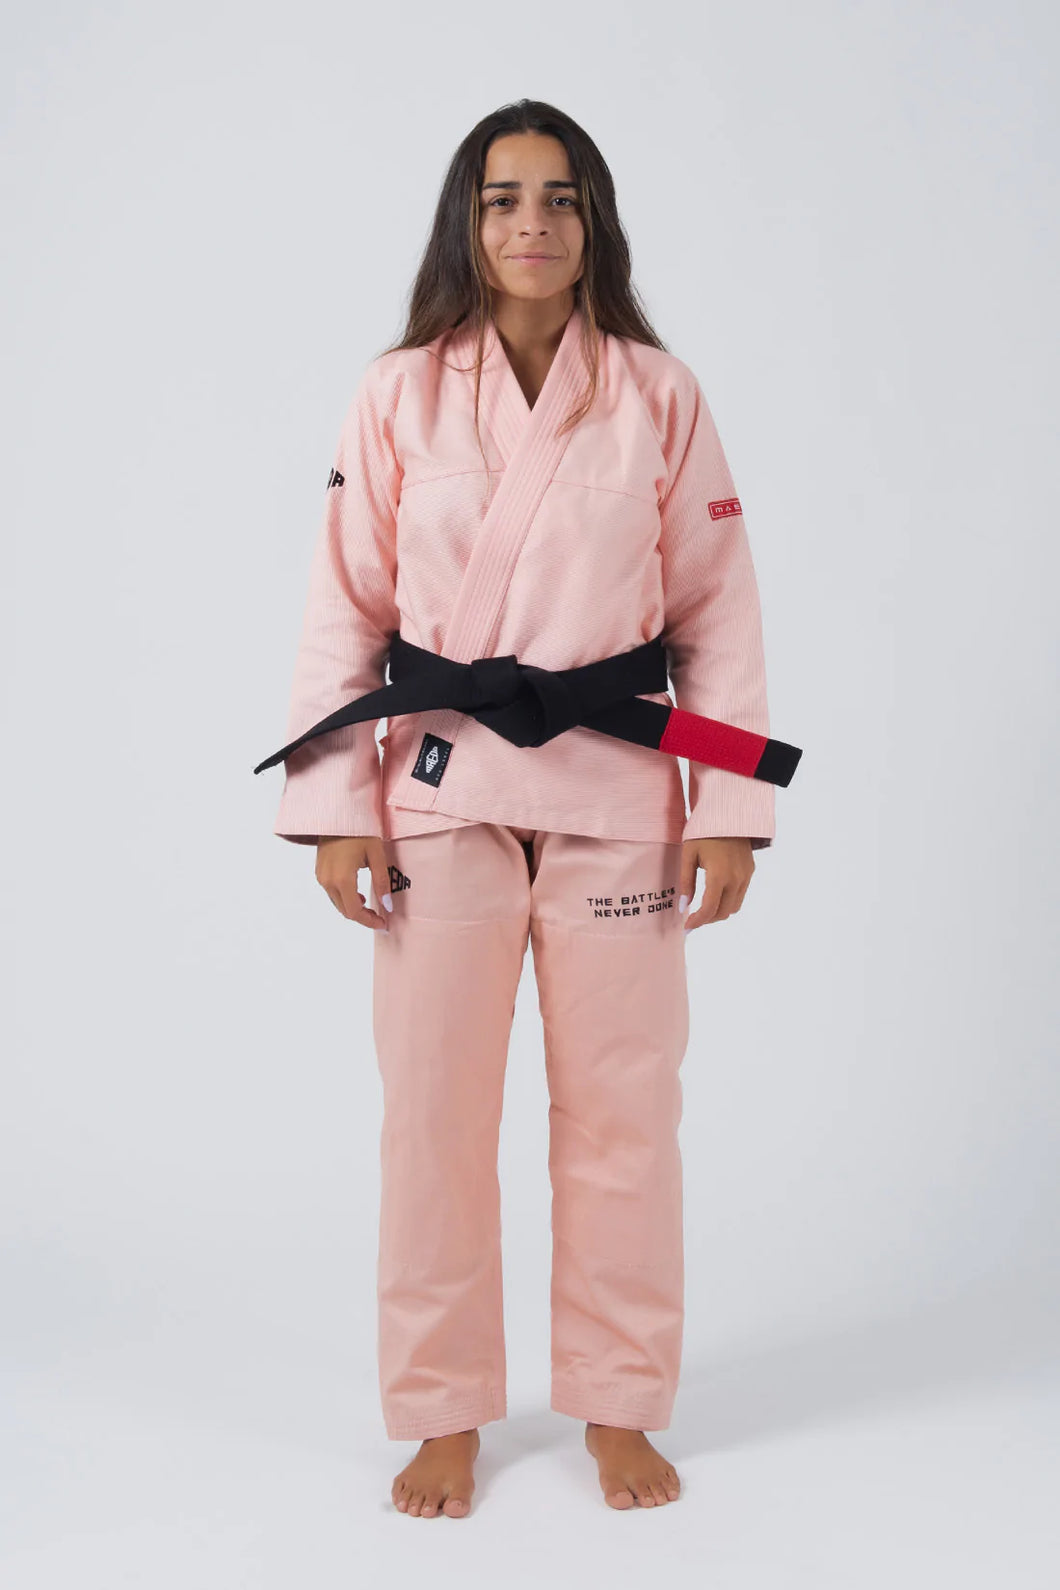 Kimono BJJ (GI) Maeda Red Label 3.0 Peach for Women - Cinturão Branca incluída